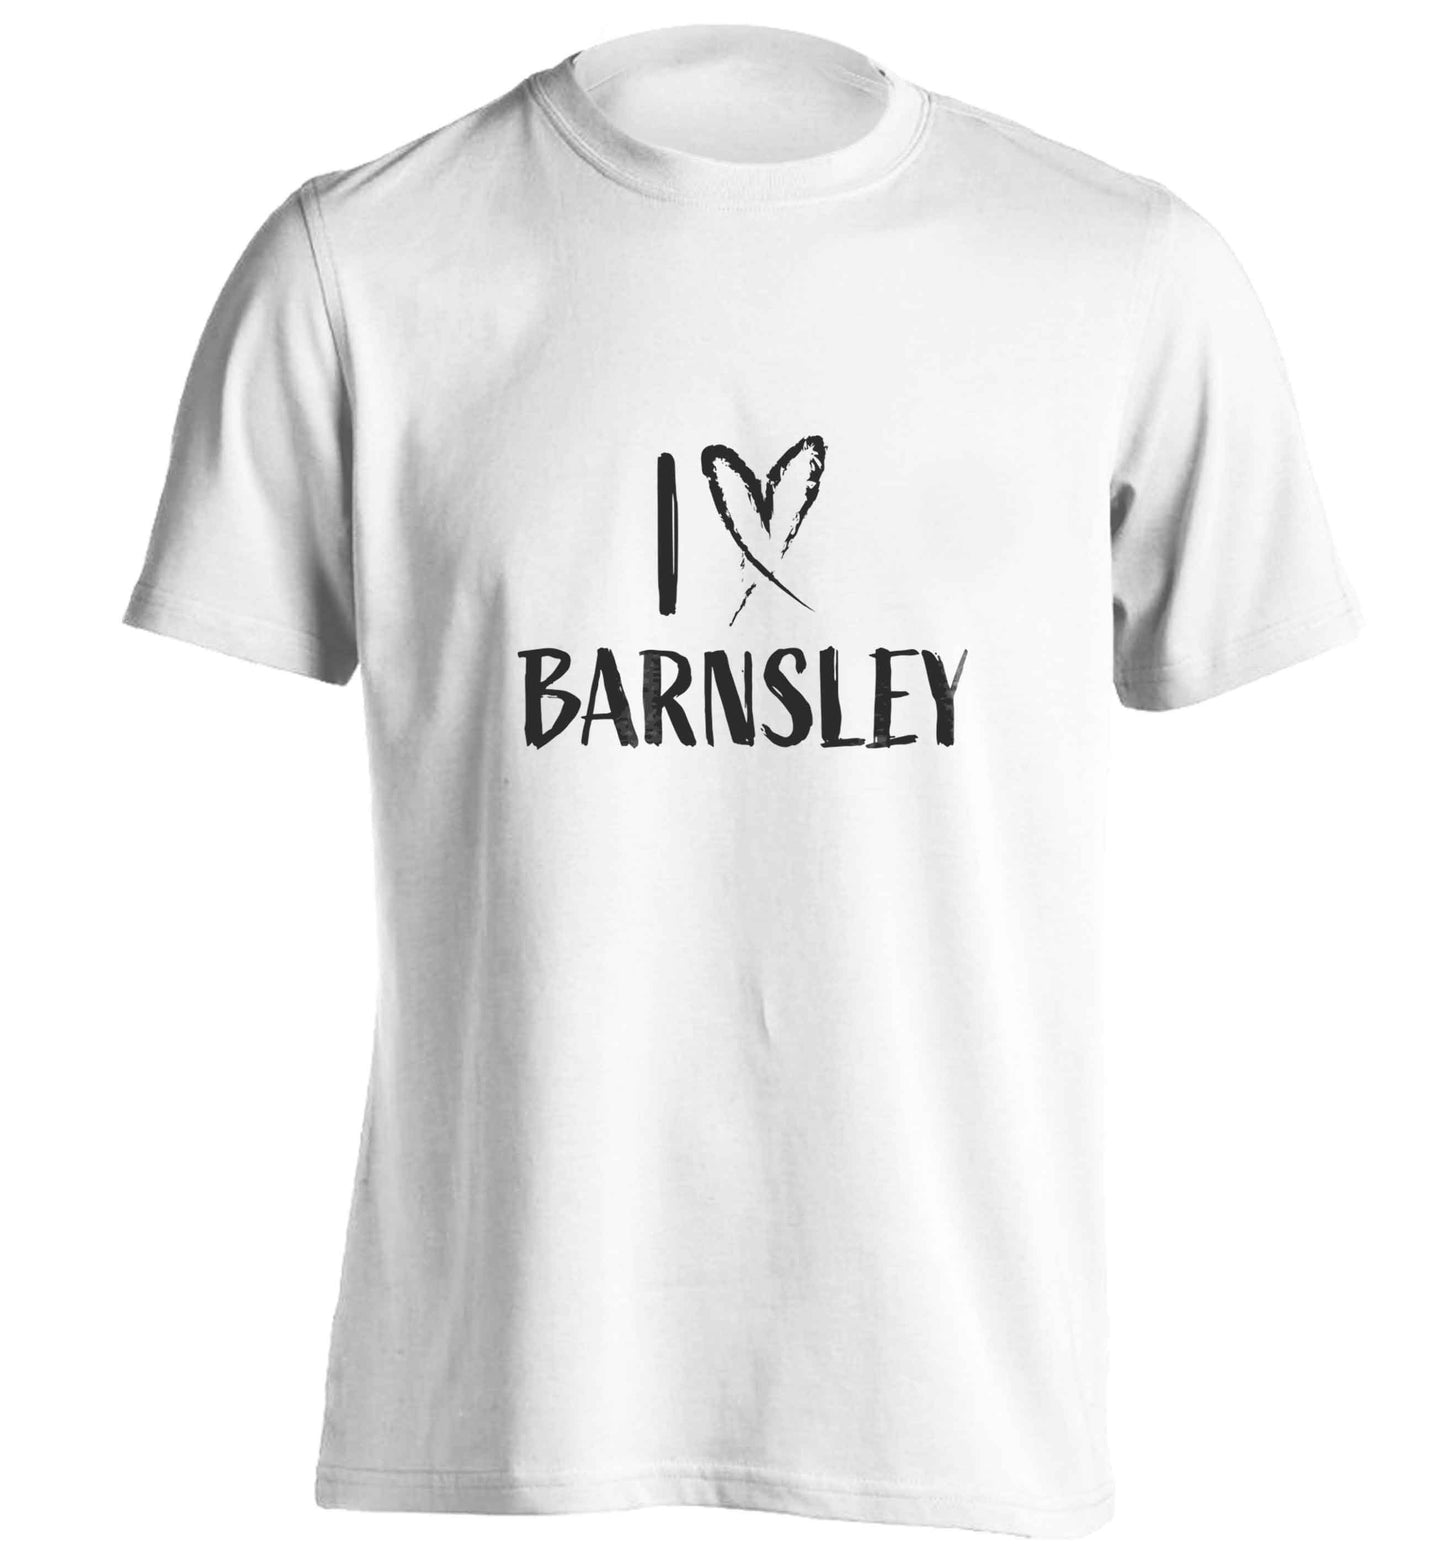 I love Barnsley adults unisex white Tshirt 2XL